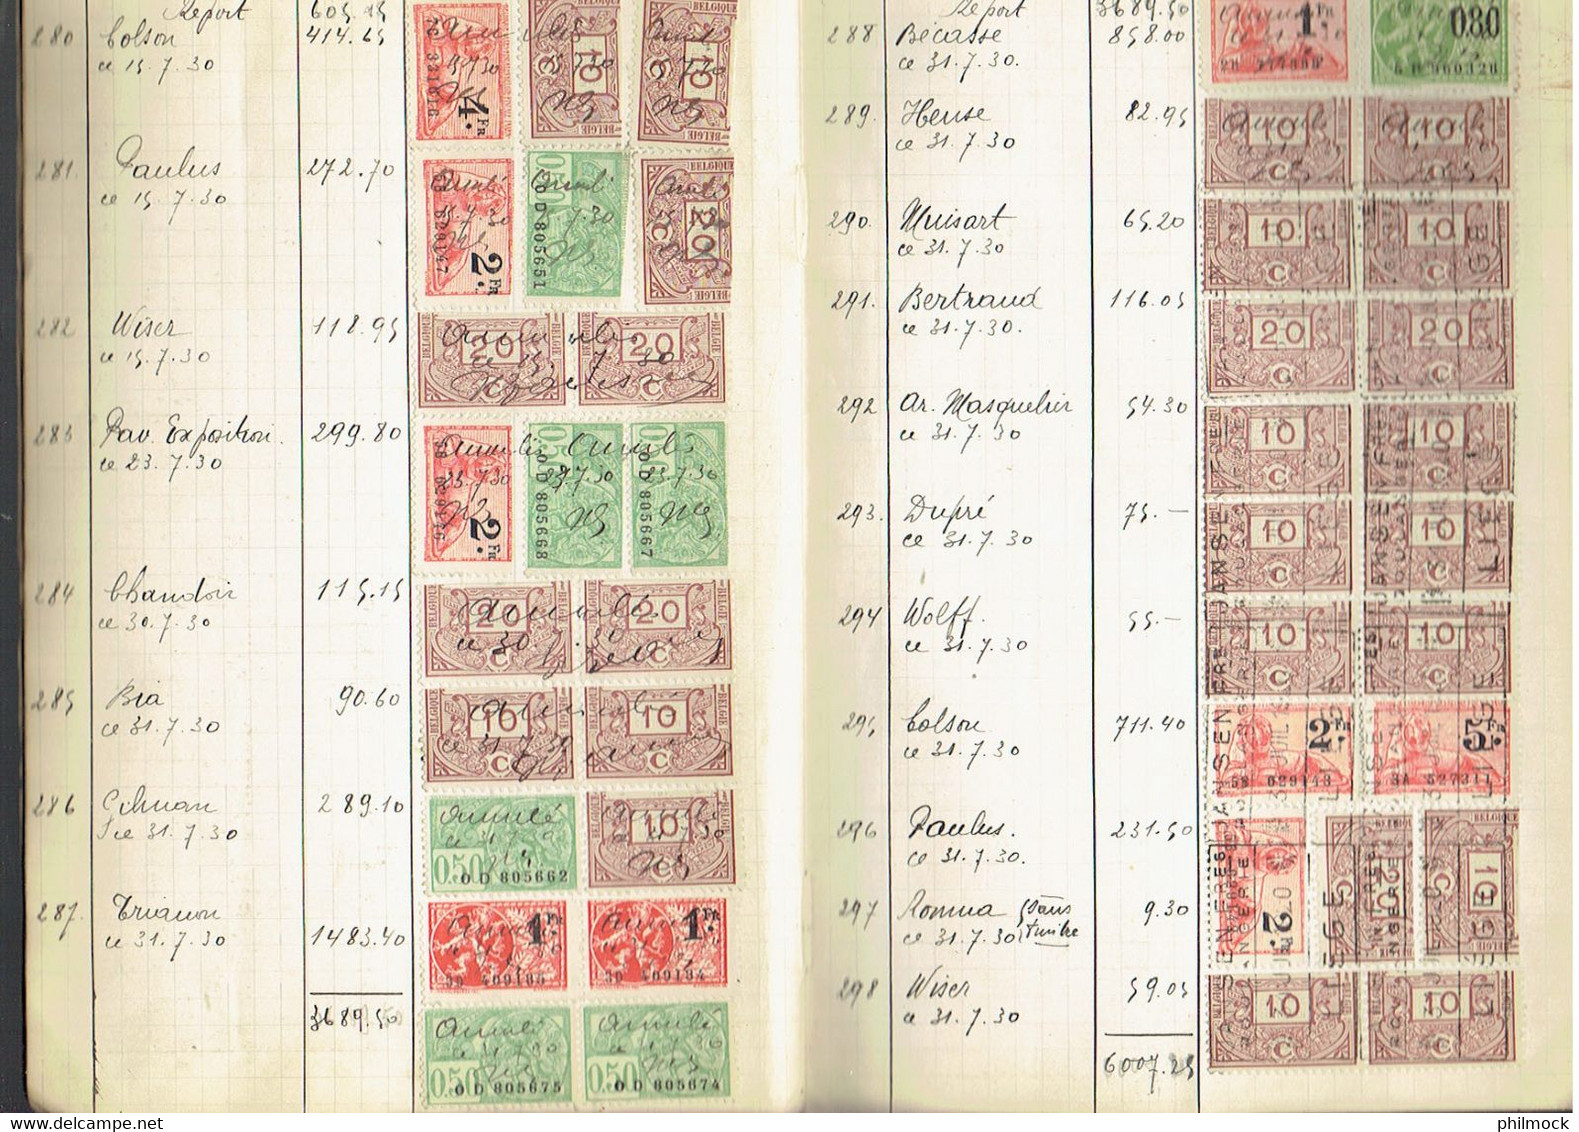 16P - carnet centaine de timbres fiscaux 1929 fin 1930 - 14 pages recto-verso